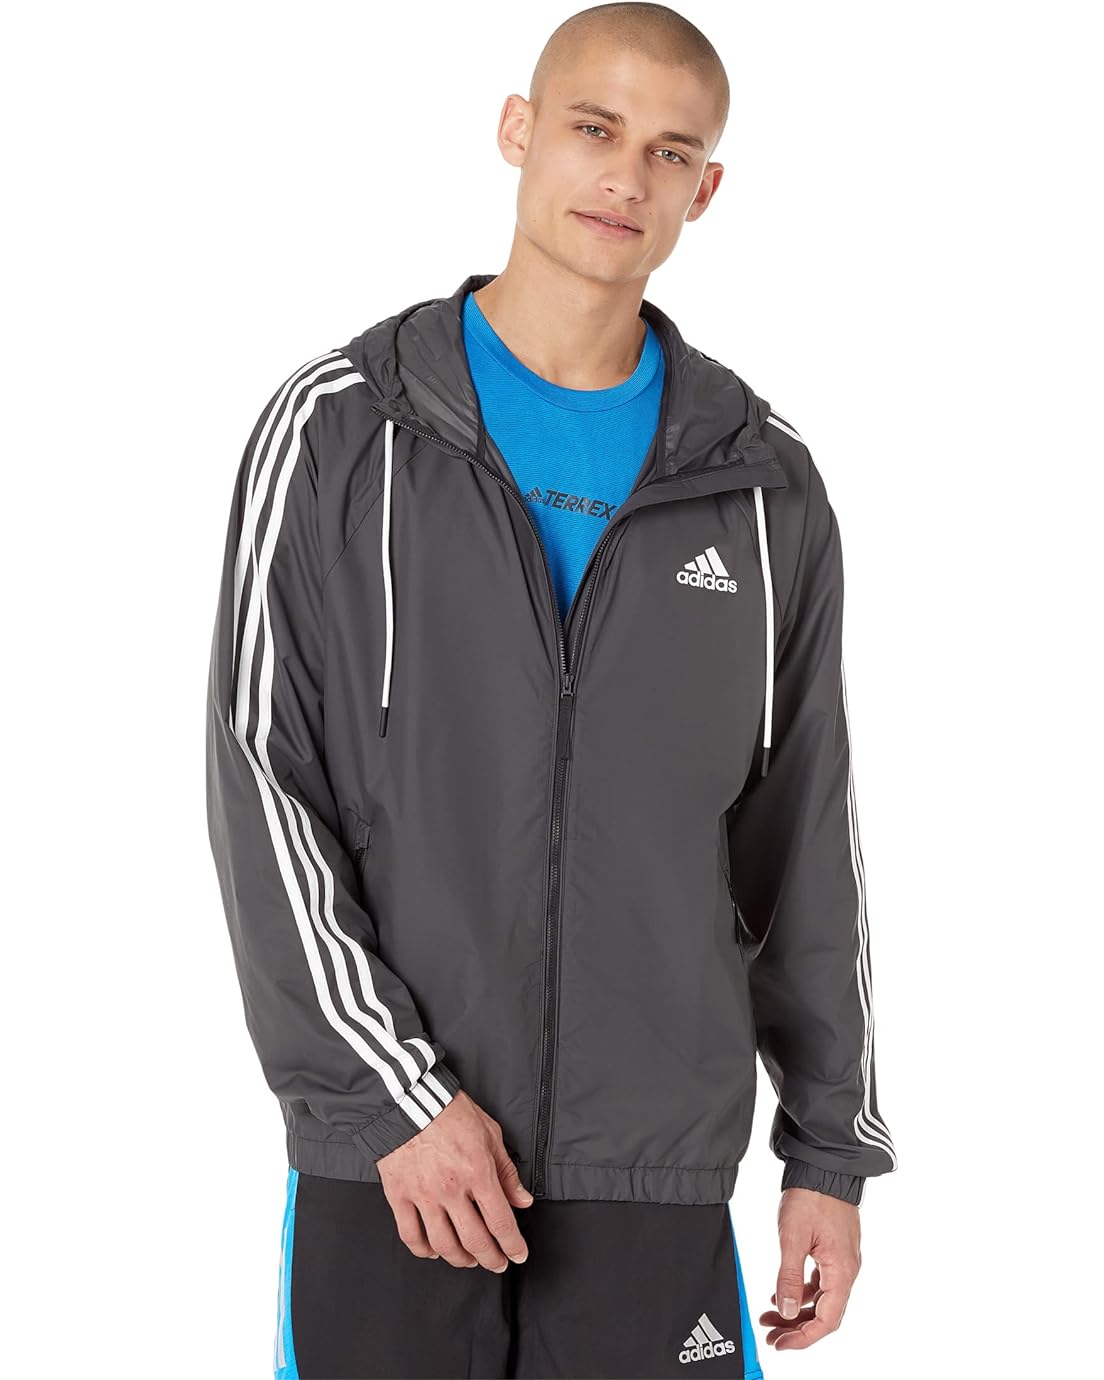 Adidas Outdoor BSC 3-Stripes Wind Jacket